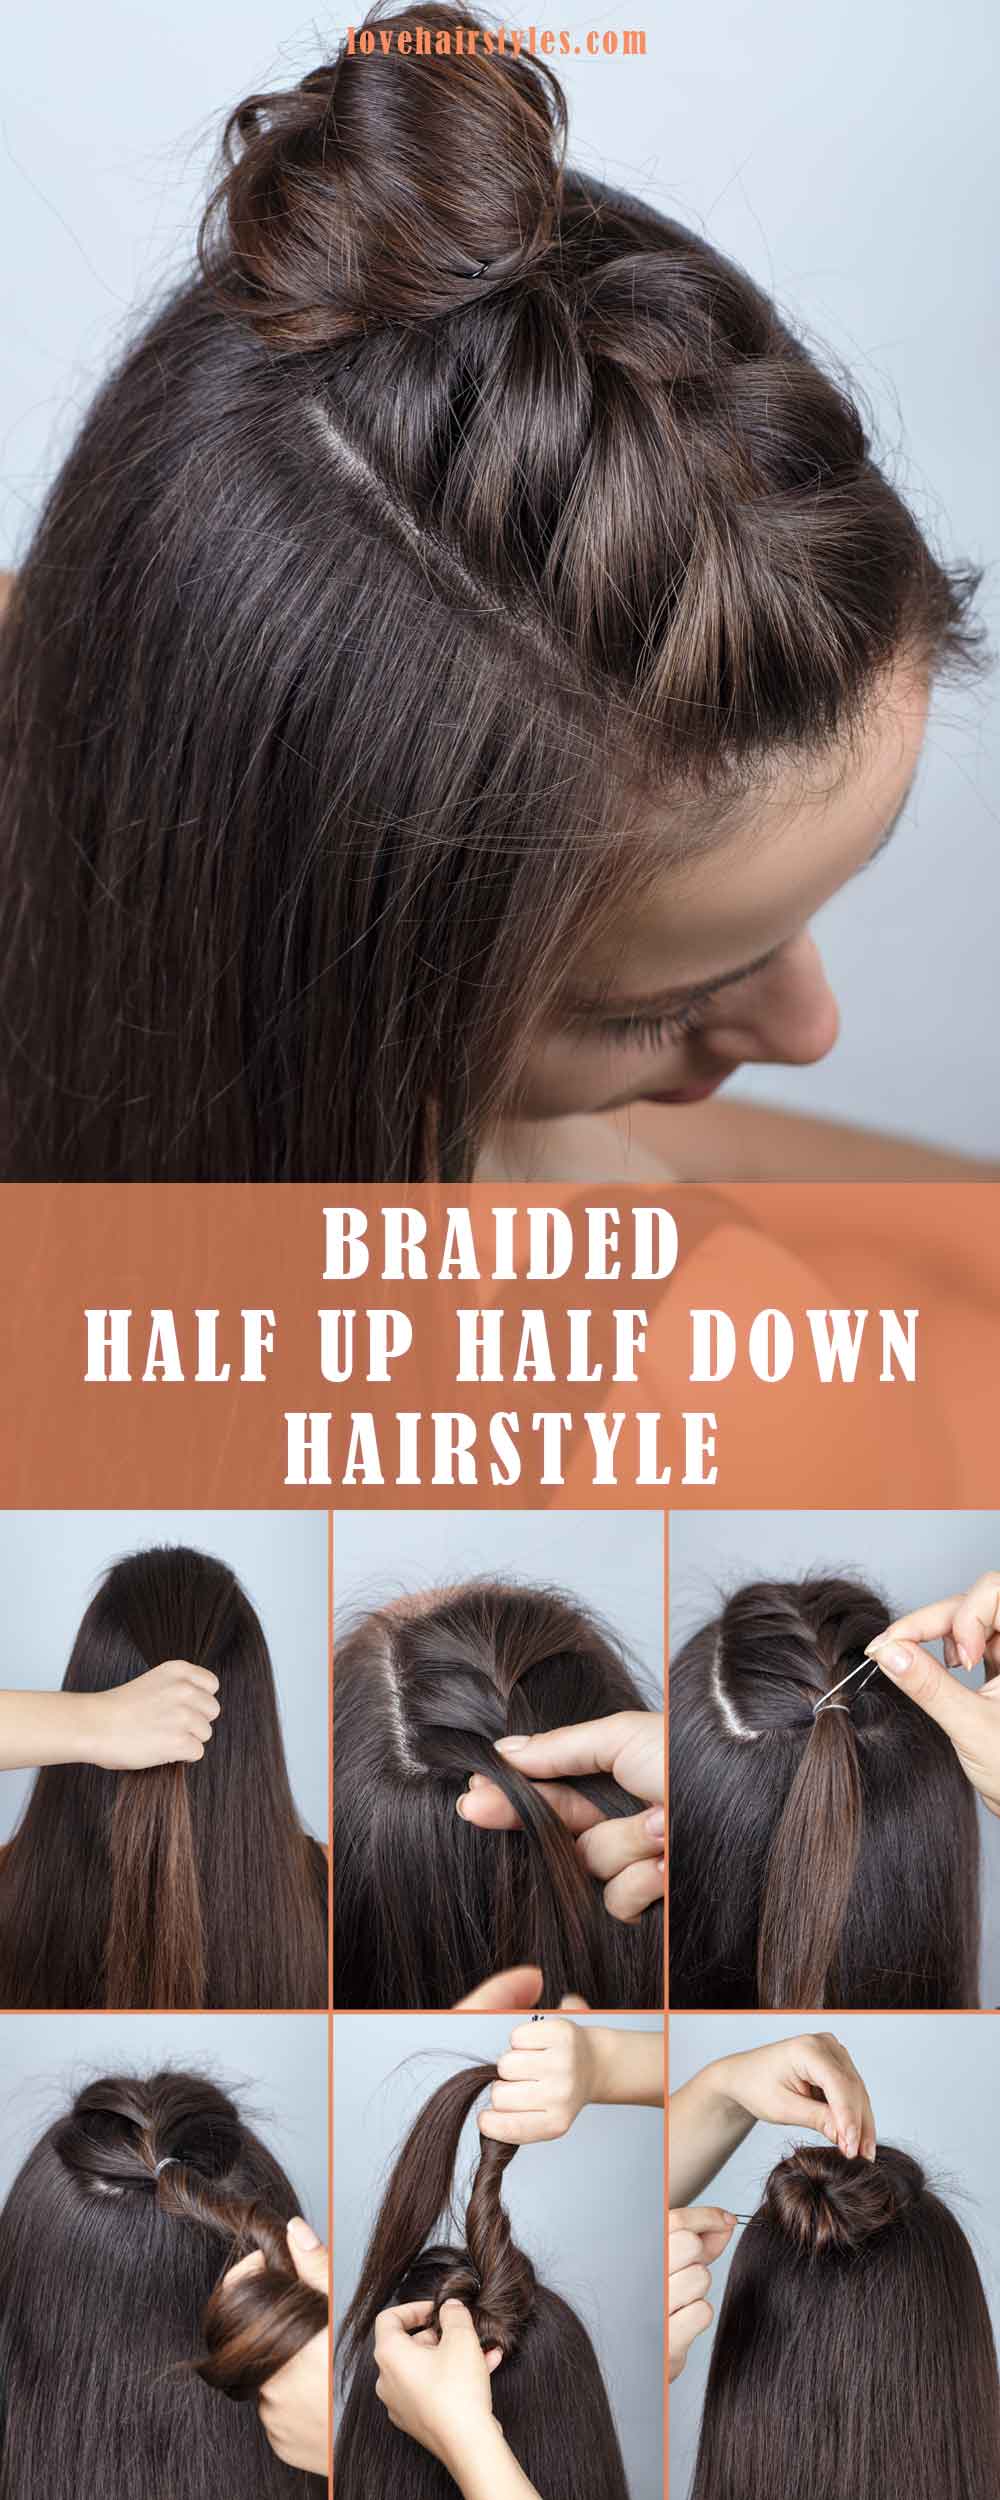 Braided Half Up Half Down Hairstyle